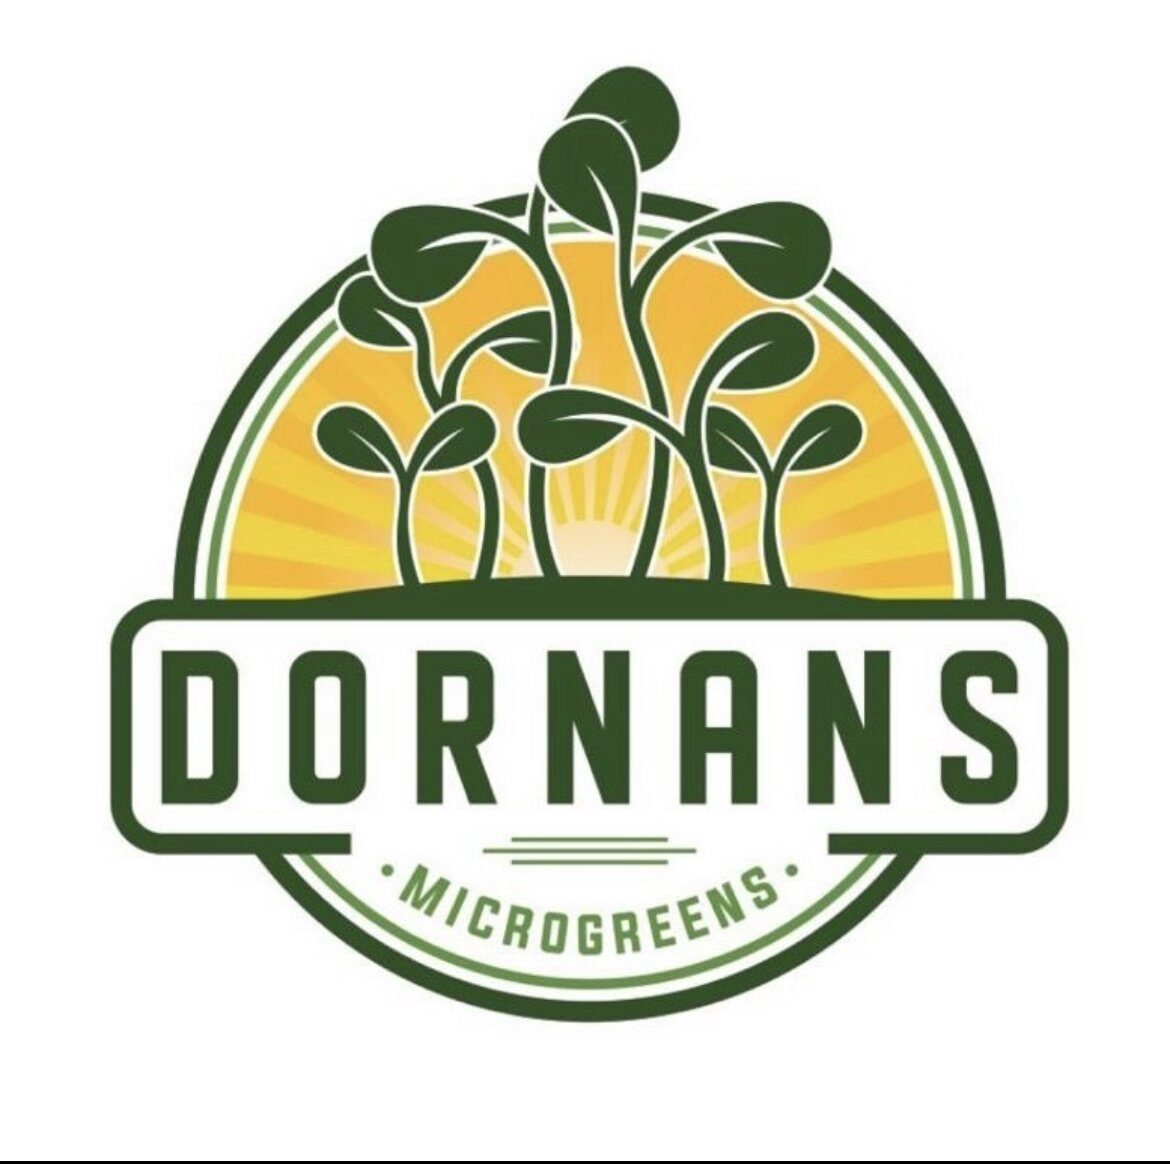 Dornans Microgreens